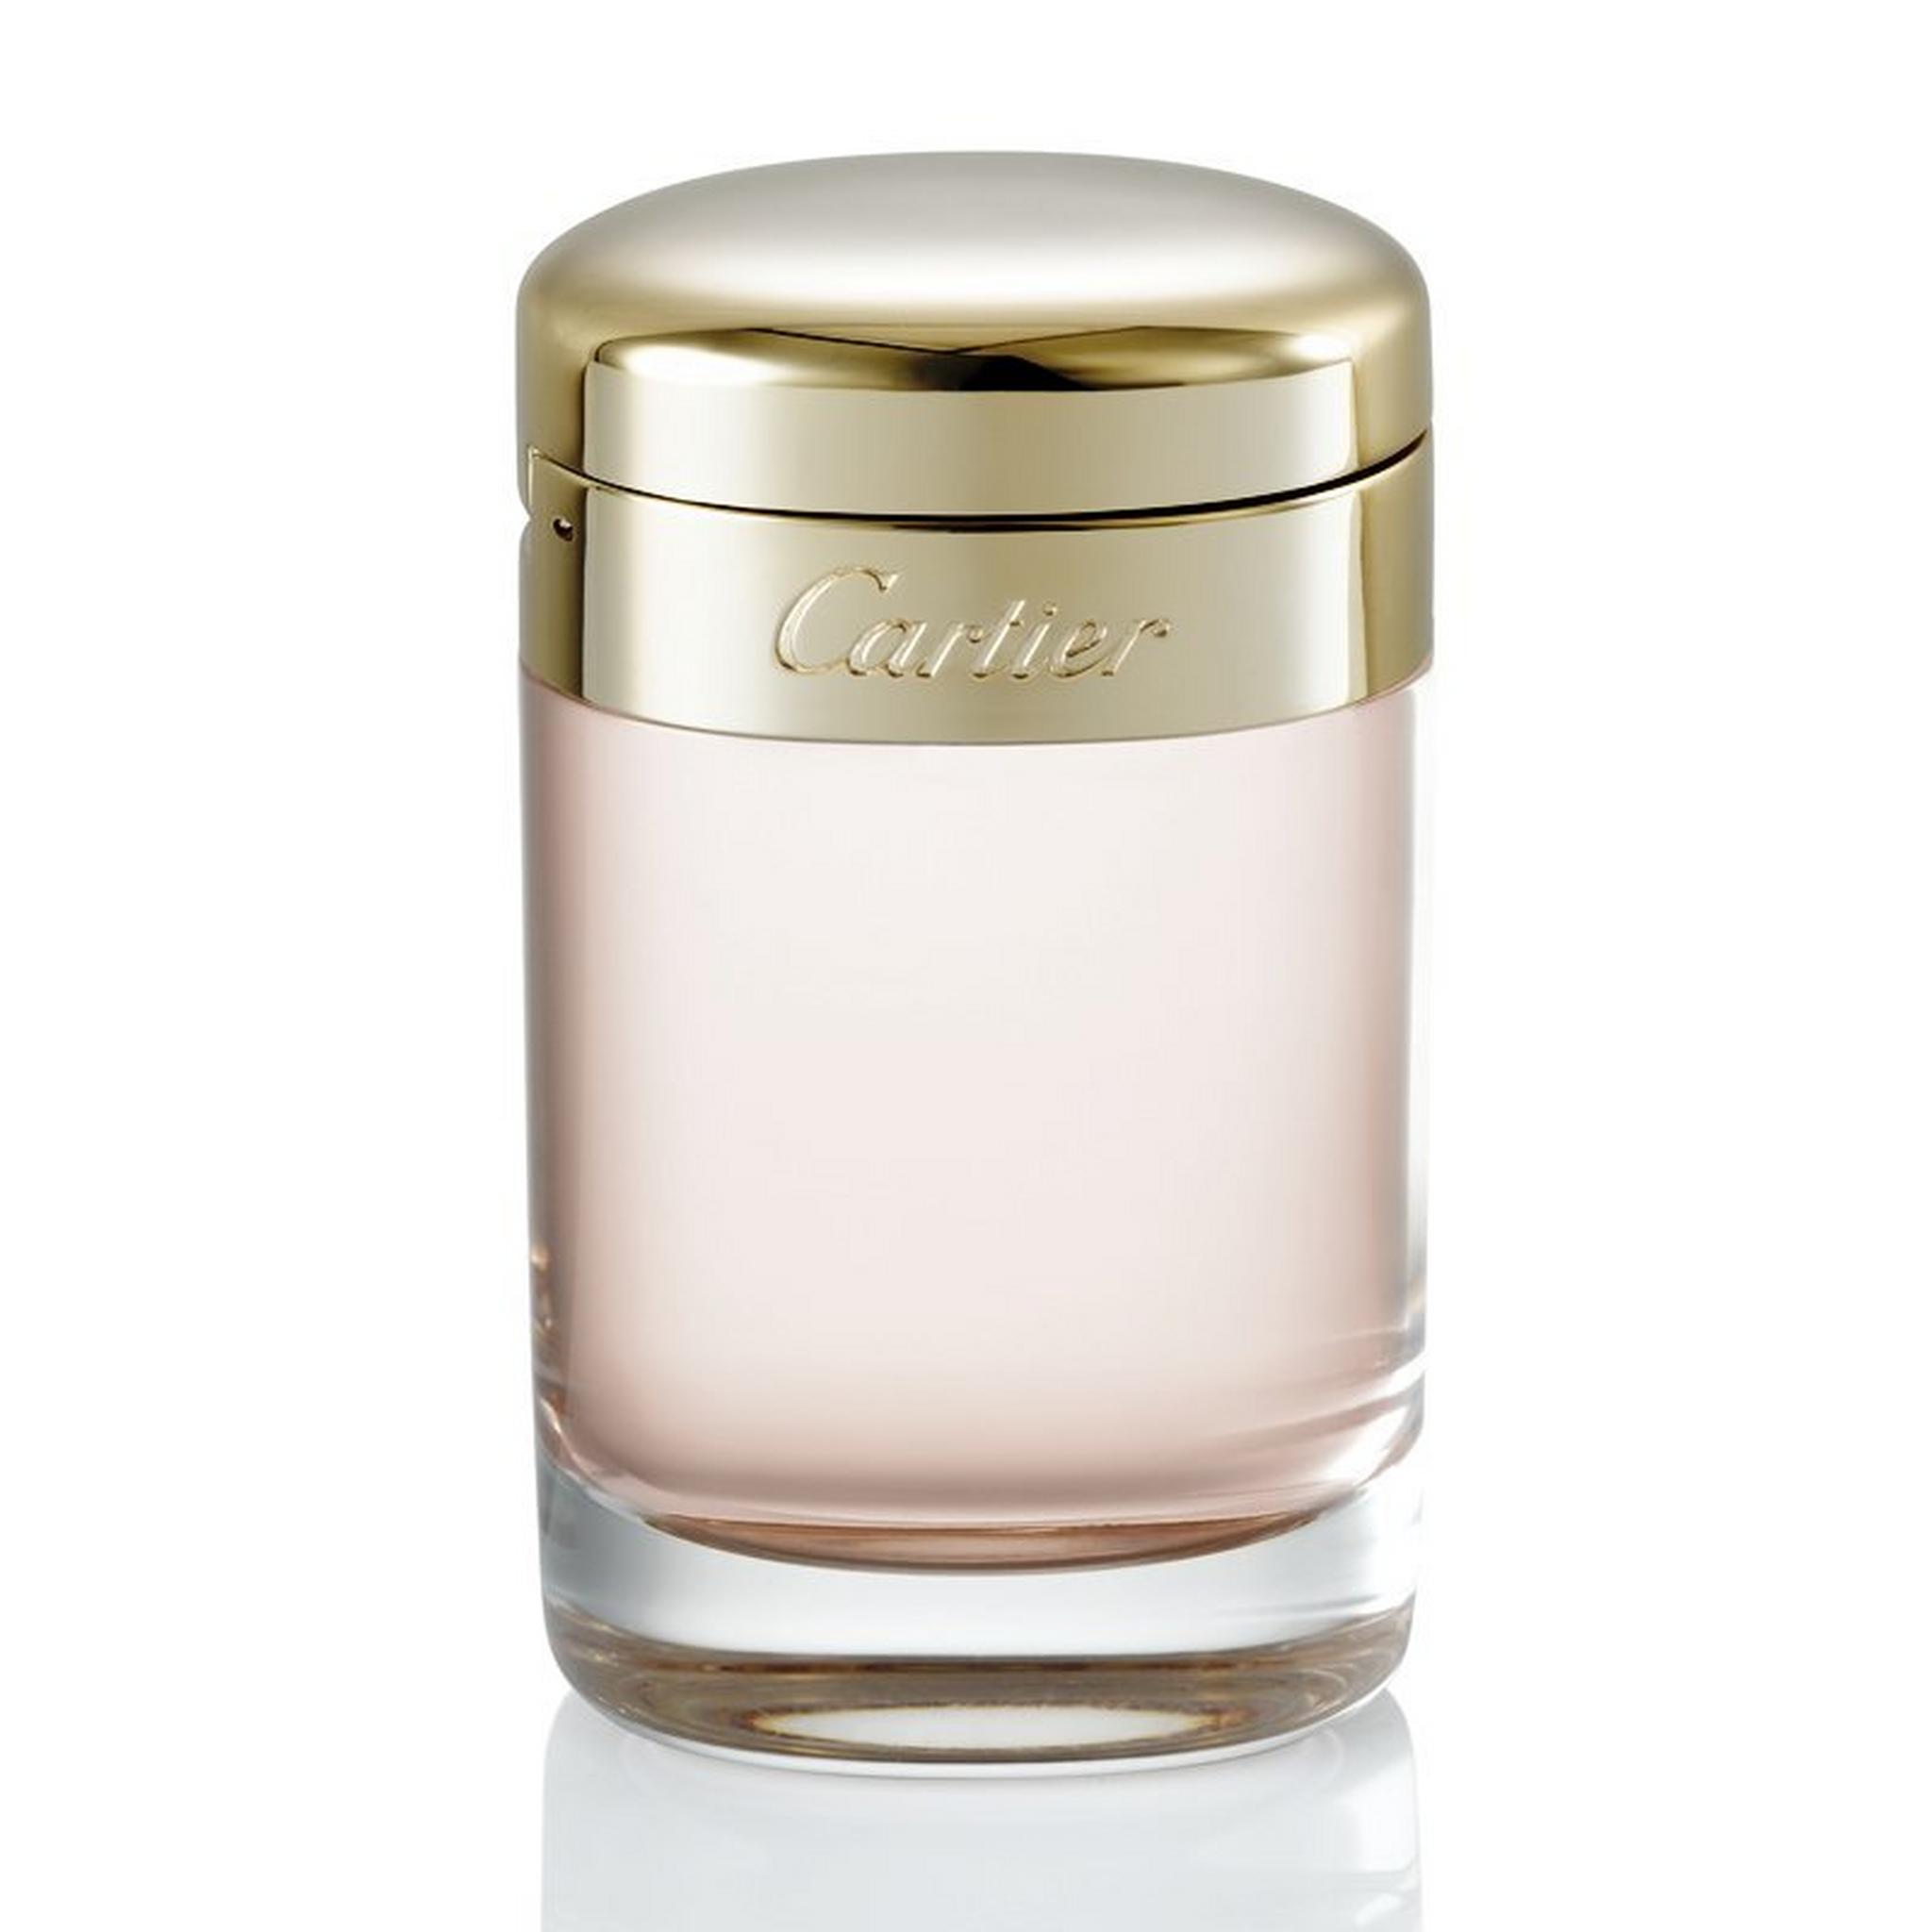 Baiser Vole by Cartier 100 ml Eau de Parfum